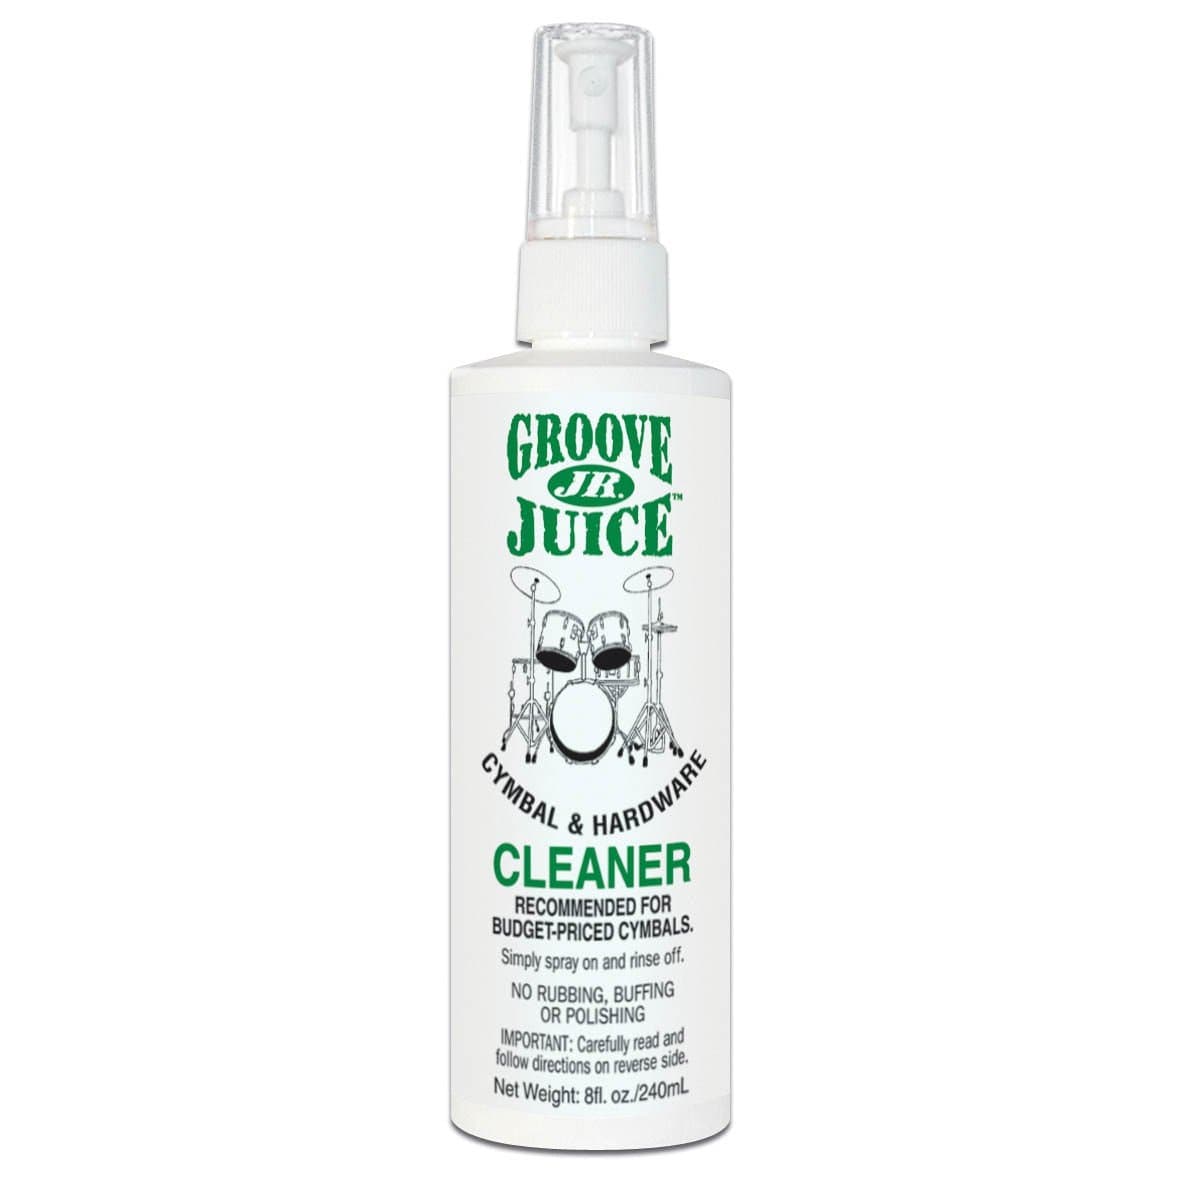 Groove Juice Drum Stick Grip Spray